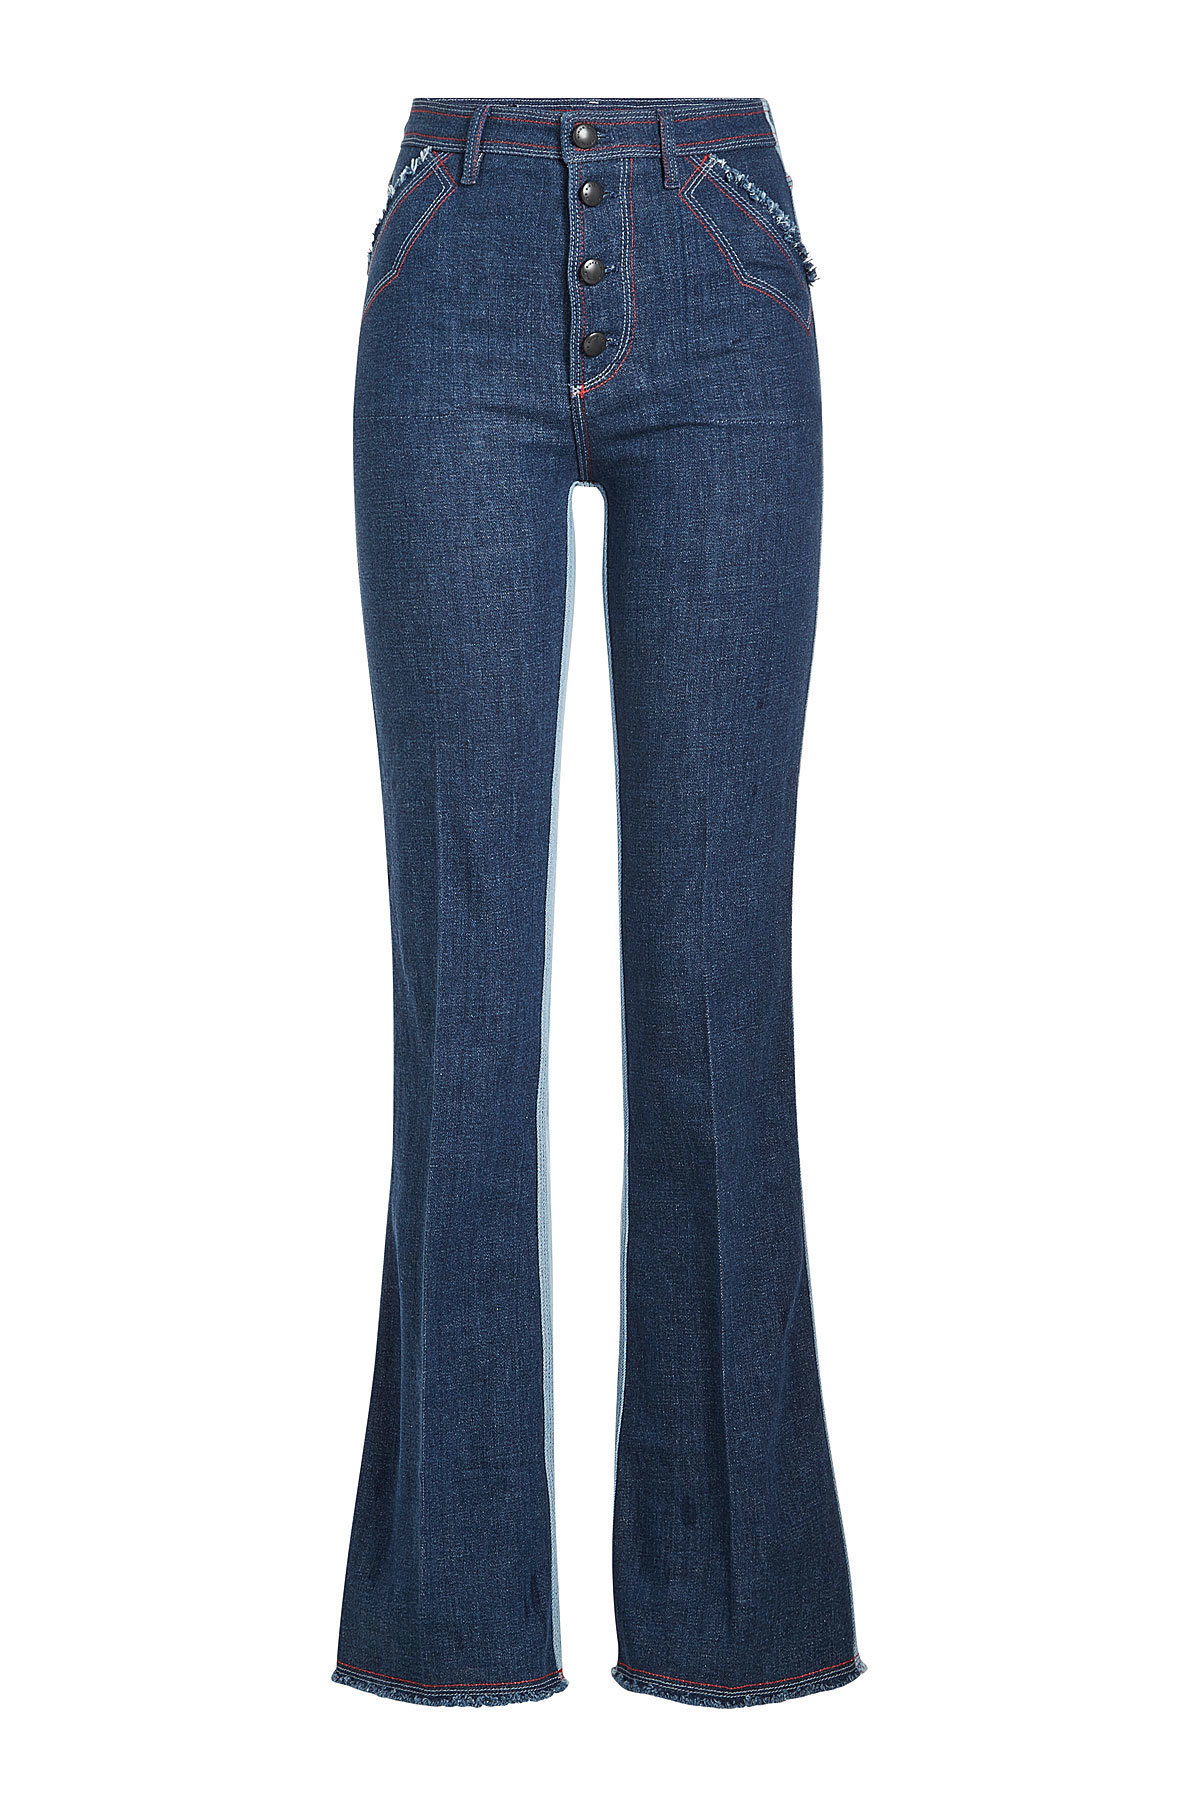 Sonia Rykiel - Two-Tone Flared Jeans